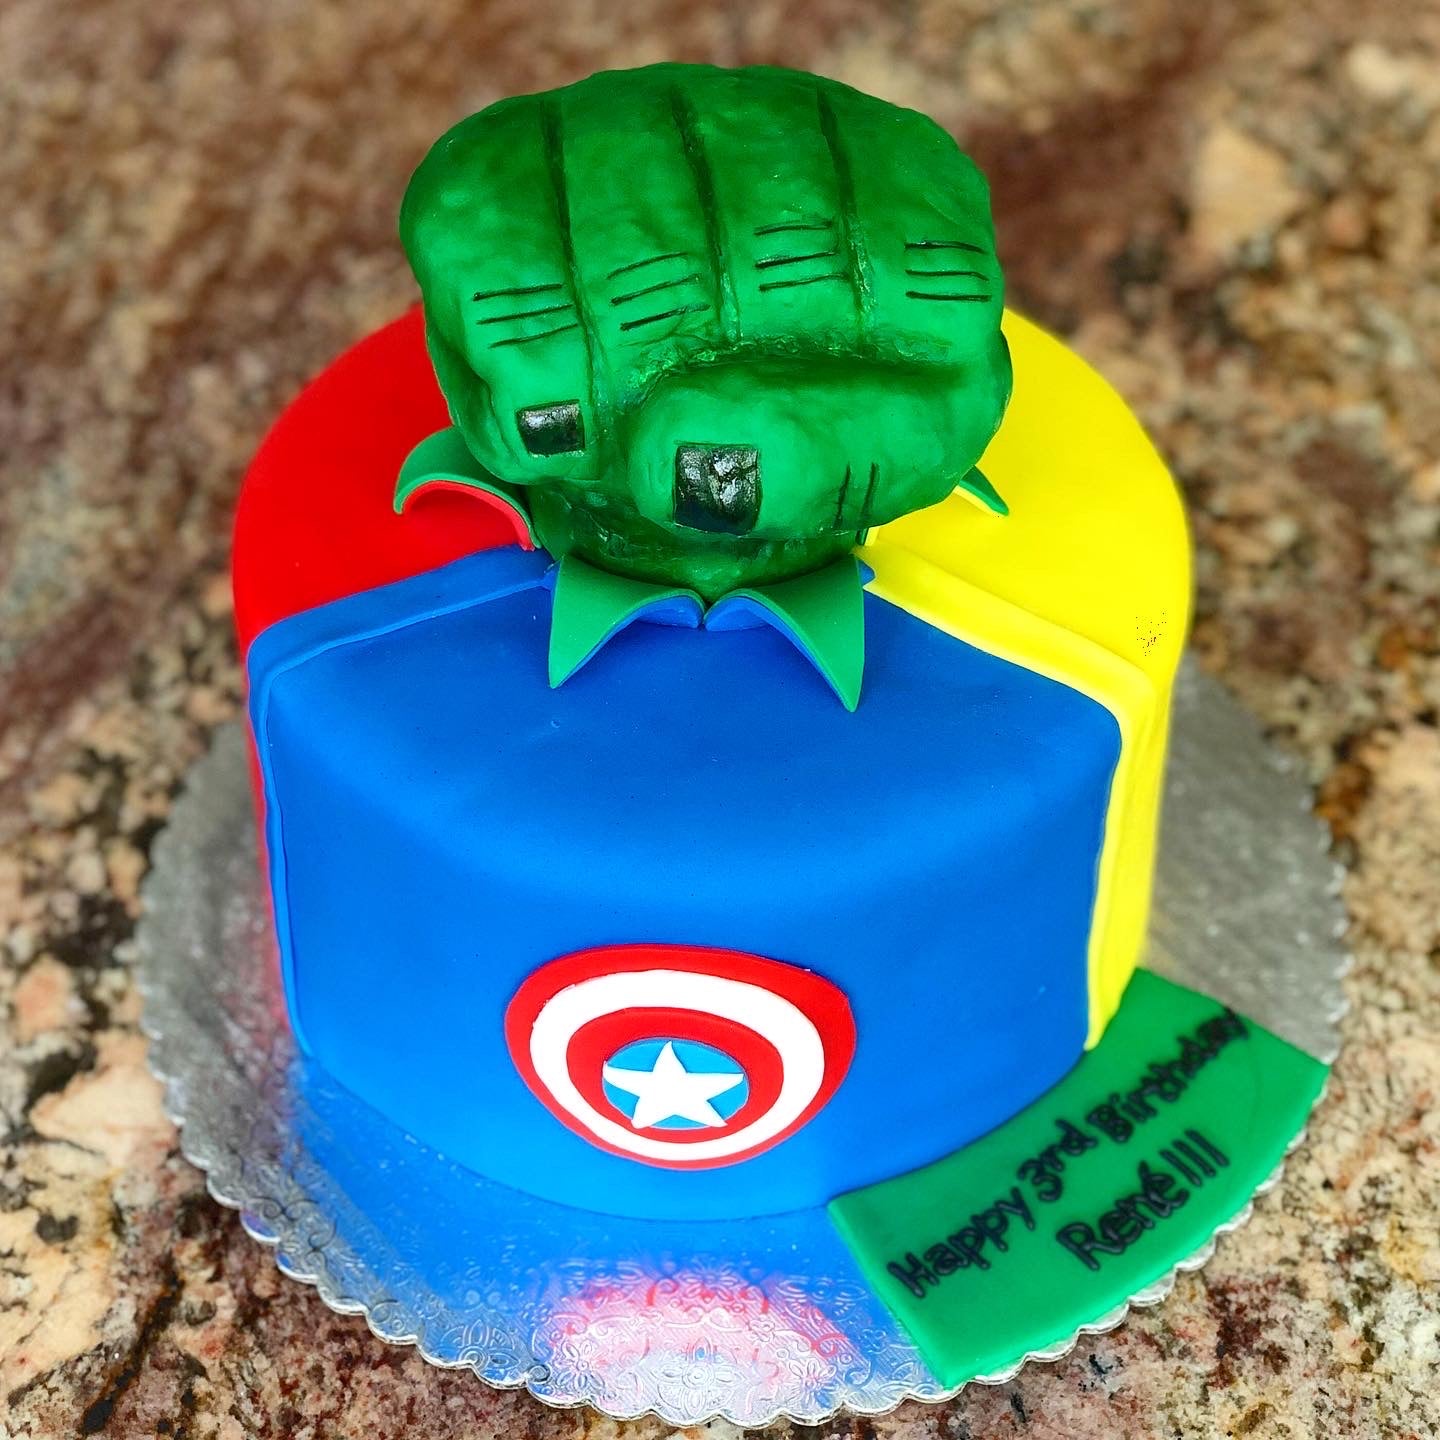 The Incredible Hulk cake